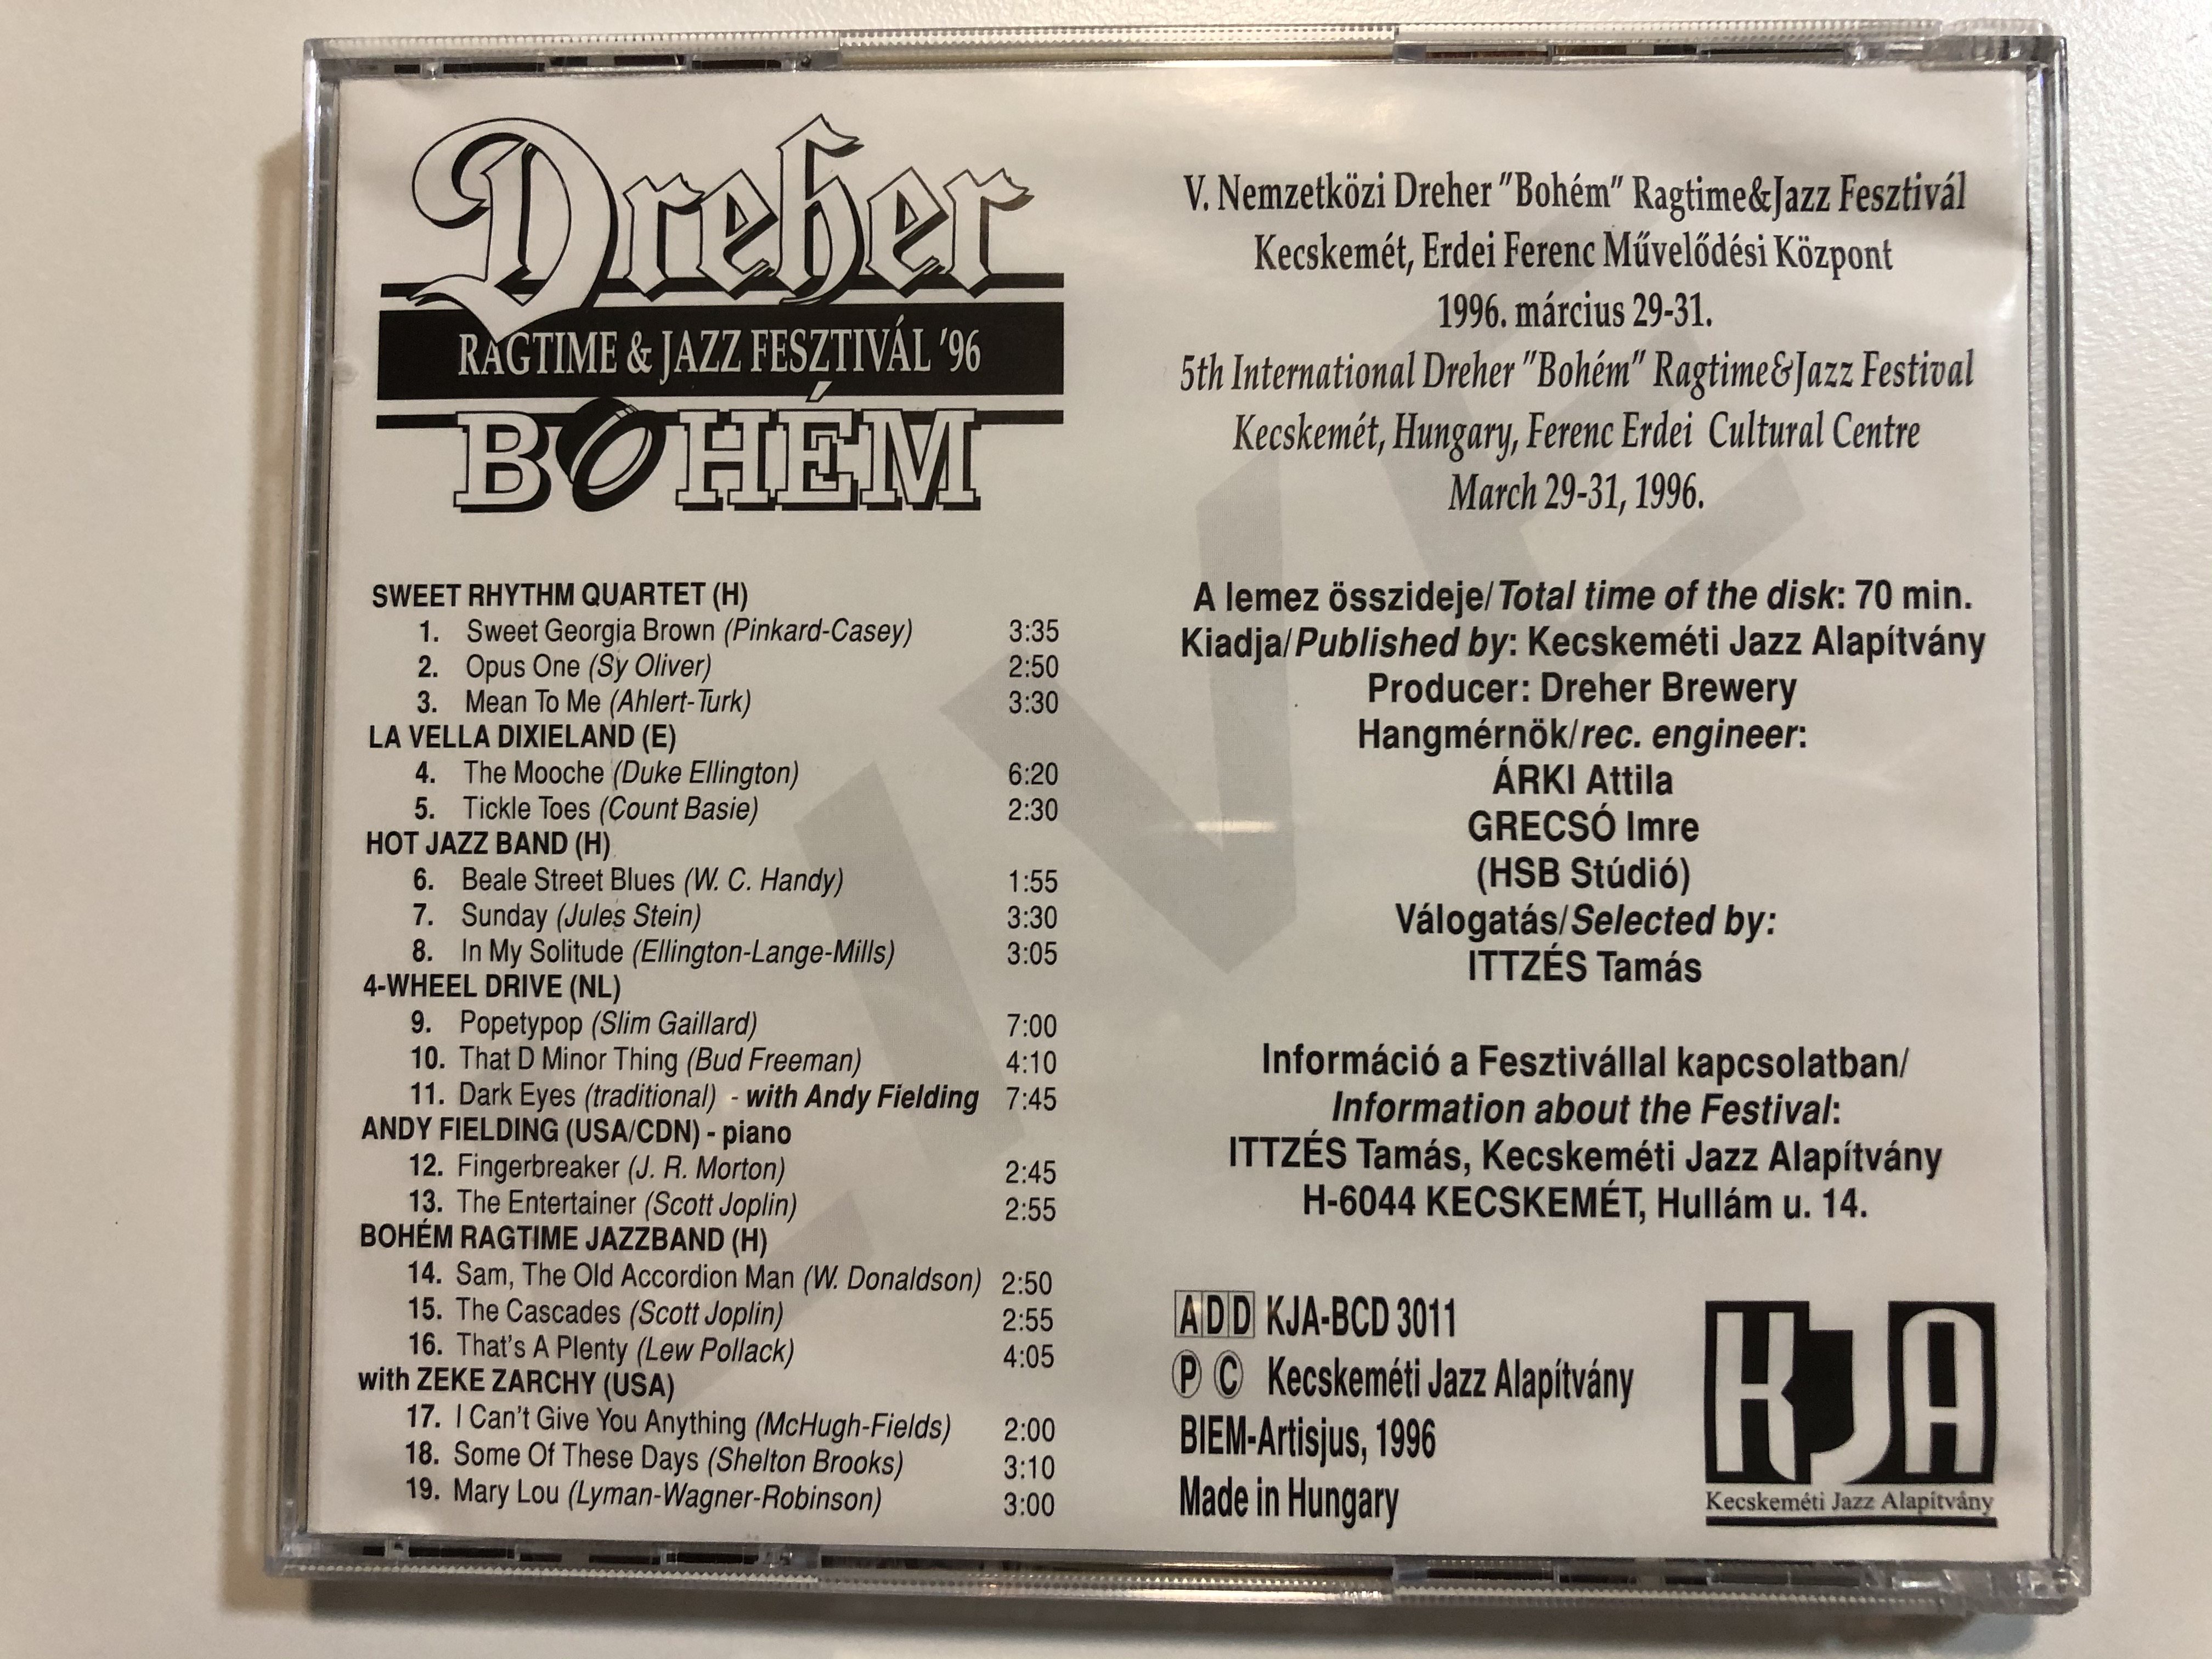 dreher-bohem-ragtime-jazz-fesztival-96-kecskemet-hungary-march-29-31-1996-sweet-rhythm-quartet-la-vella-dixieland-hot-jazz-band-4-wheel-drive-andy-fielding-kecskemeti-jaz-6-.jpg